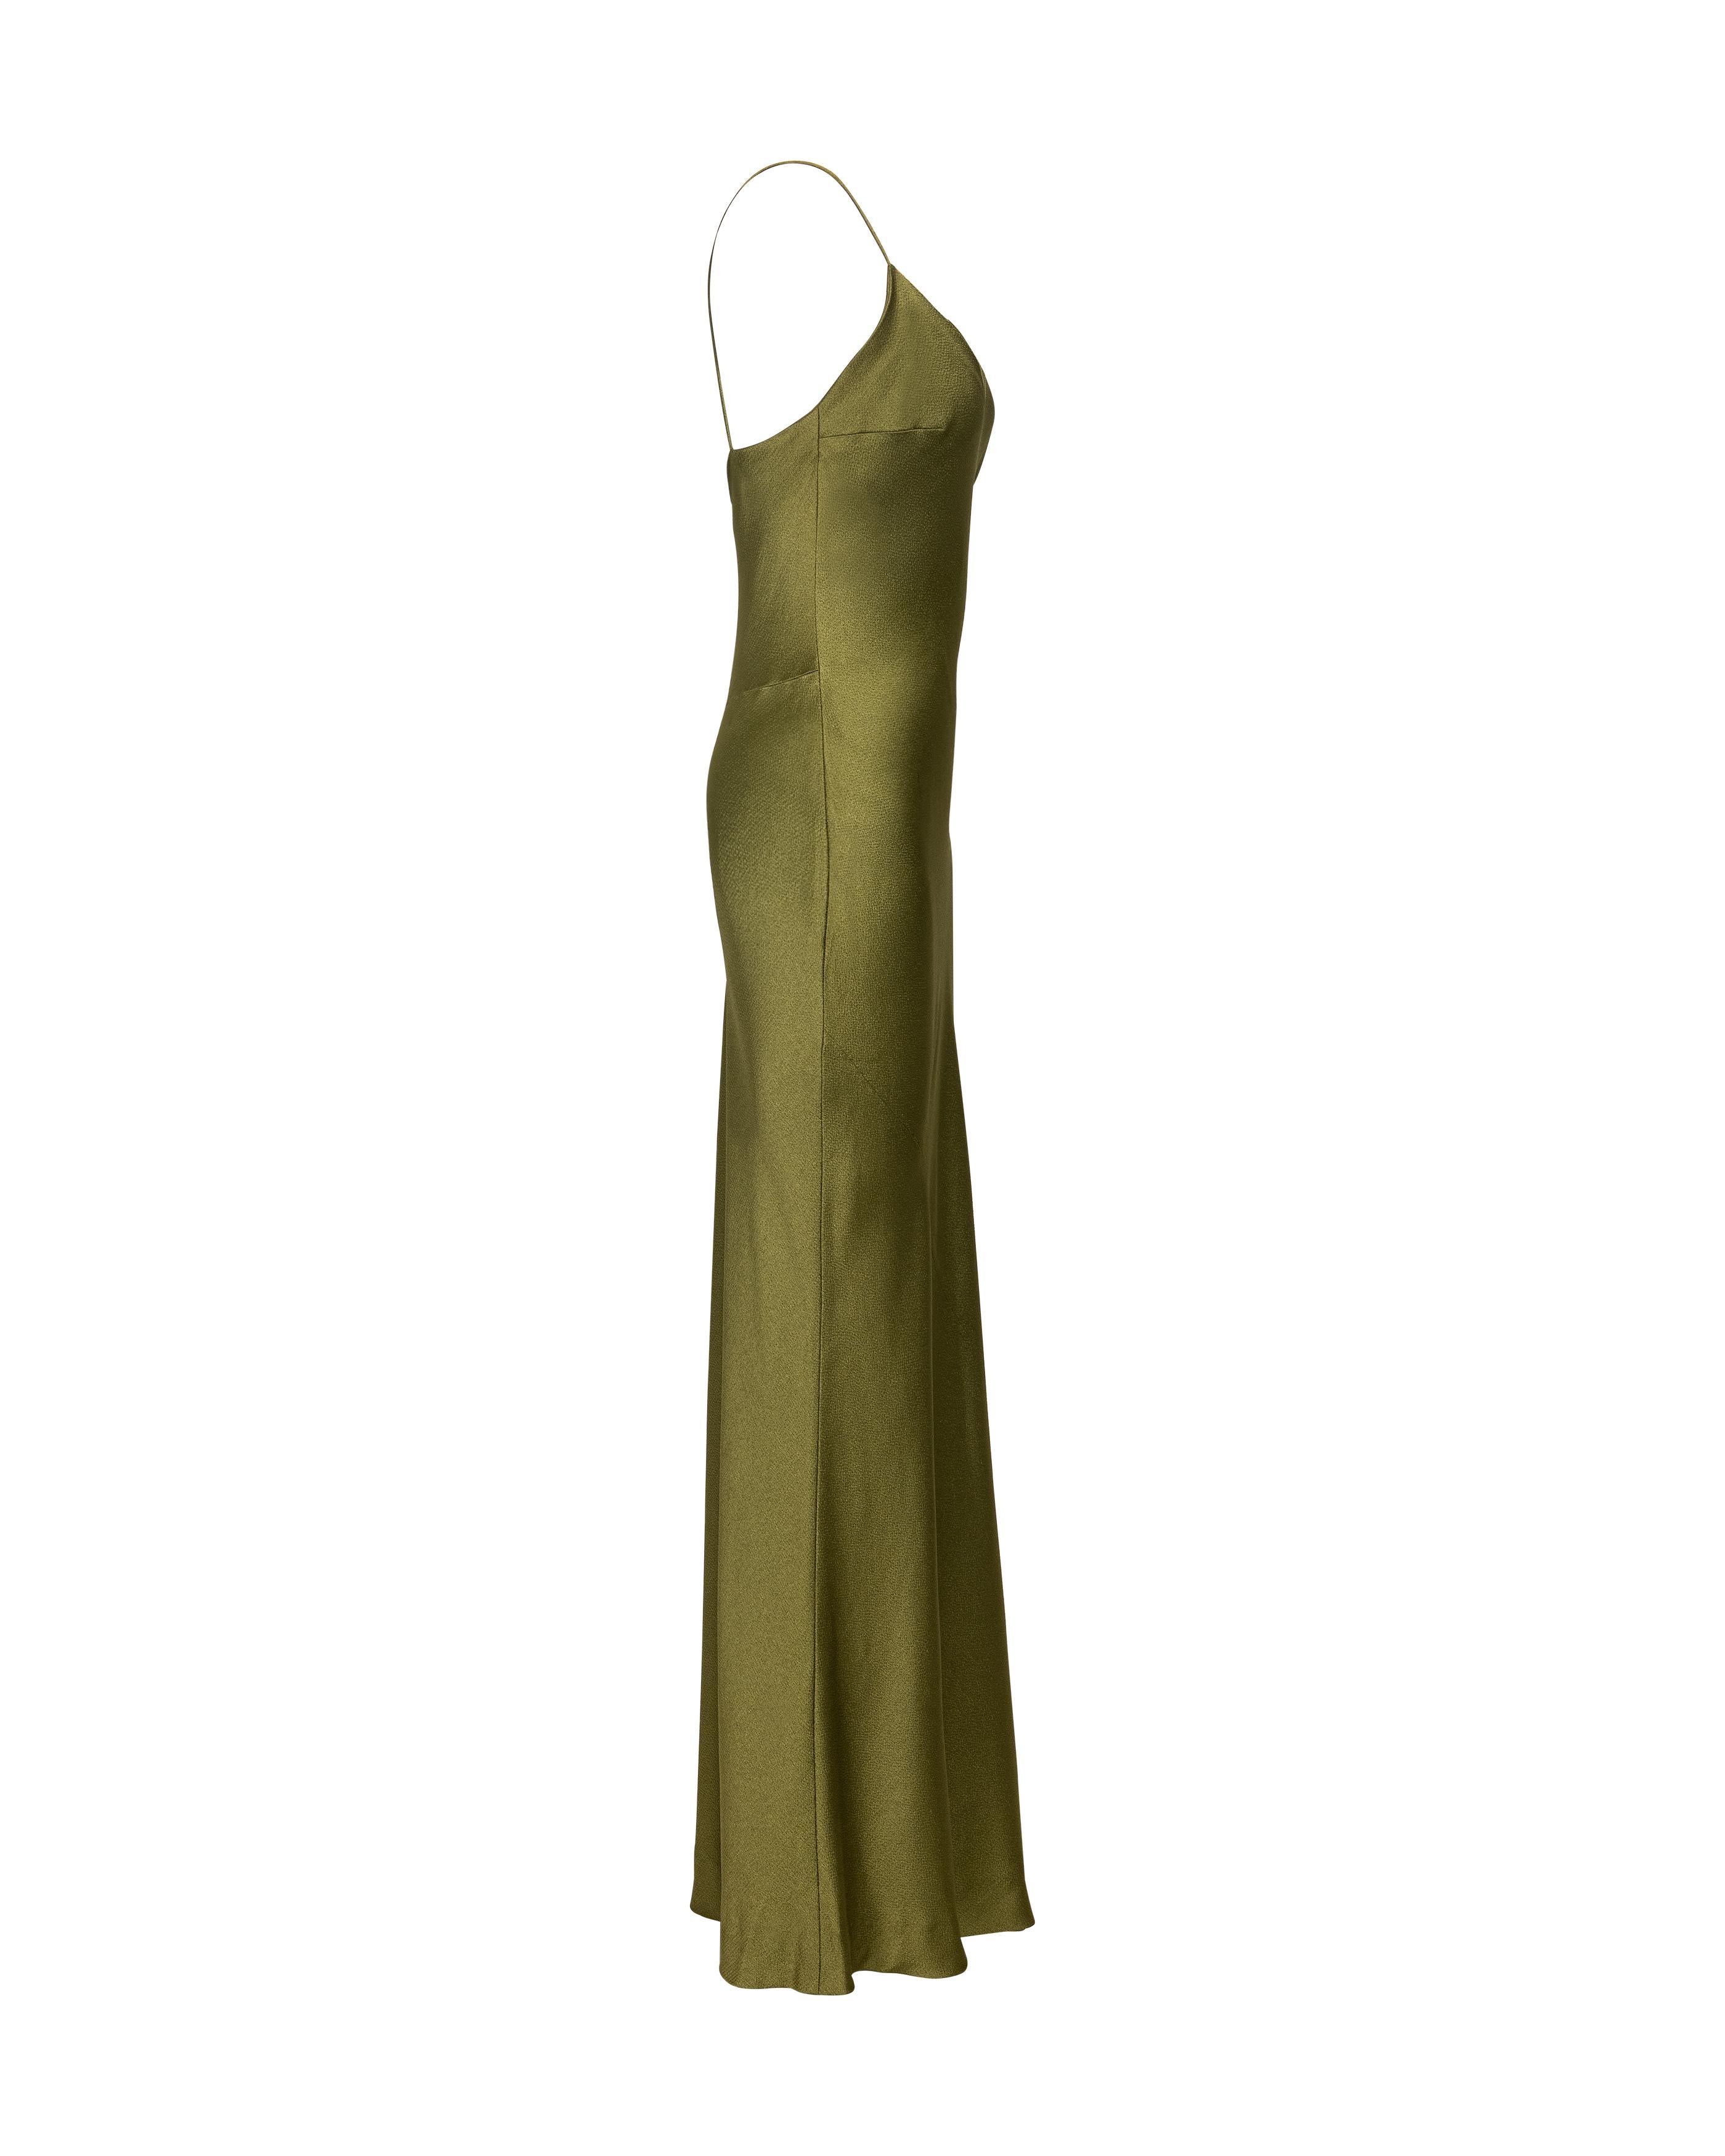 Robe-culotte Christian Dior by John Galliano vert olive coupée en biais, P/E 1999 1